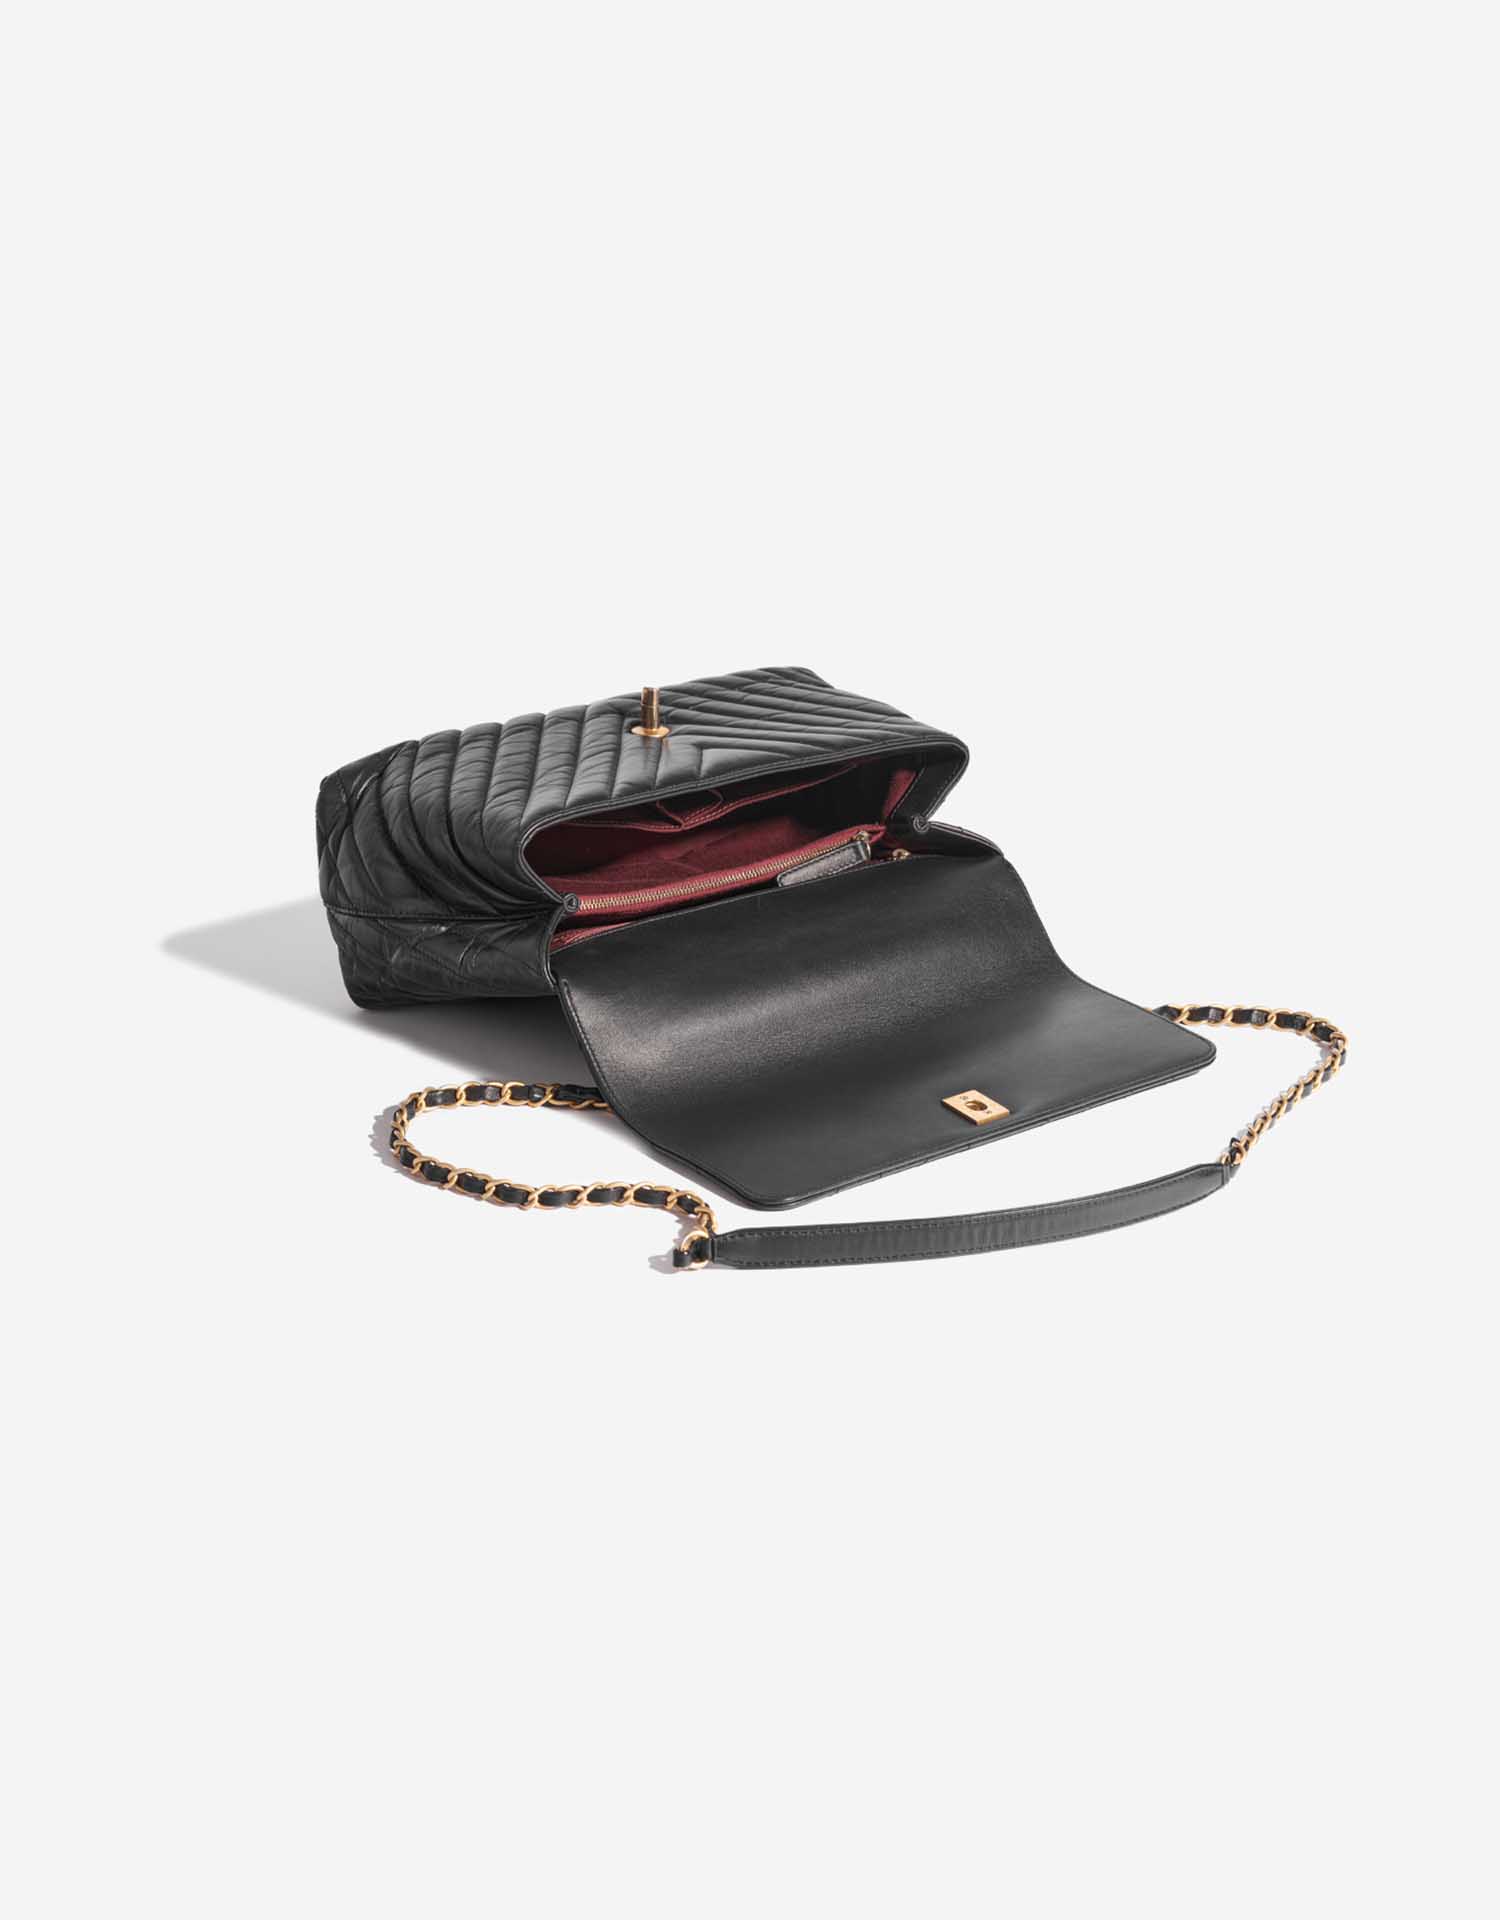 Chanel - Authenticated Timeless Classique Top Handle Handbag - Leather Black Plain for Women, Never Worn